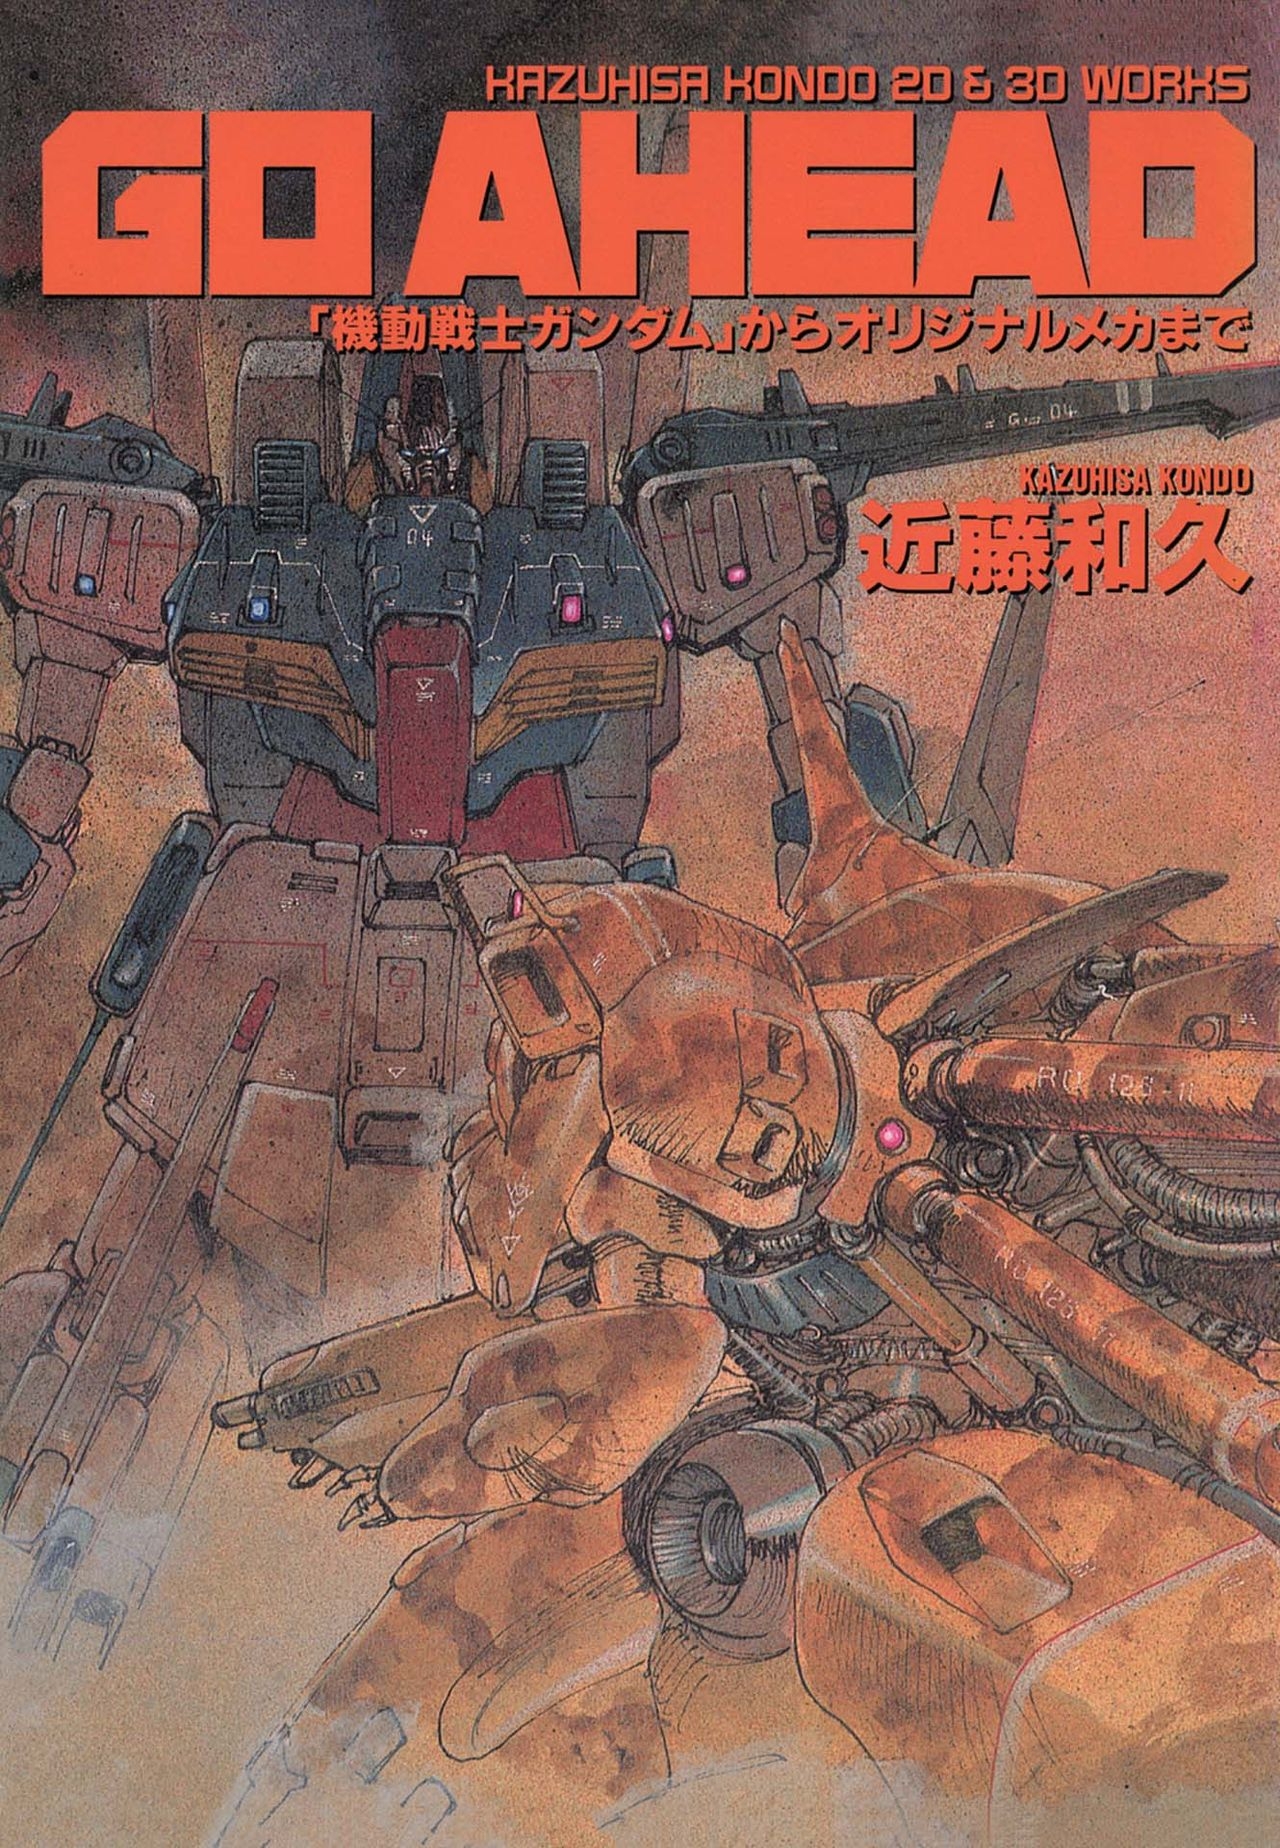 [Kazuhisa Kondo] Kazuhisa Kondo 2D & 3D Works - Go Ahead - From Mobile Suit Gundam to Original Mechanism 0